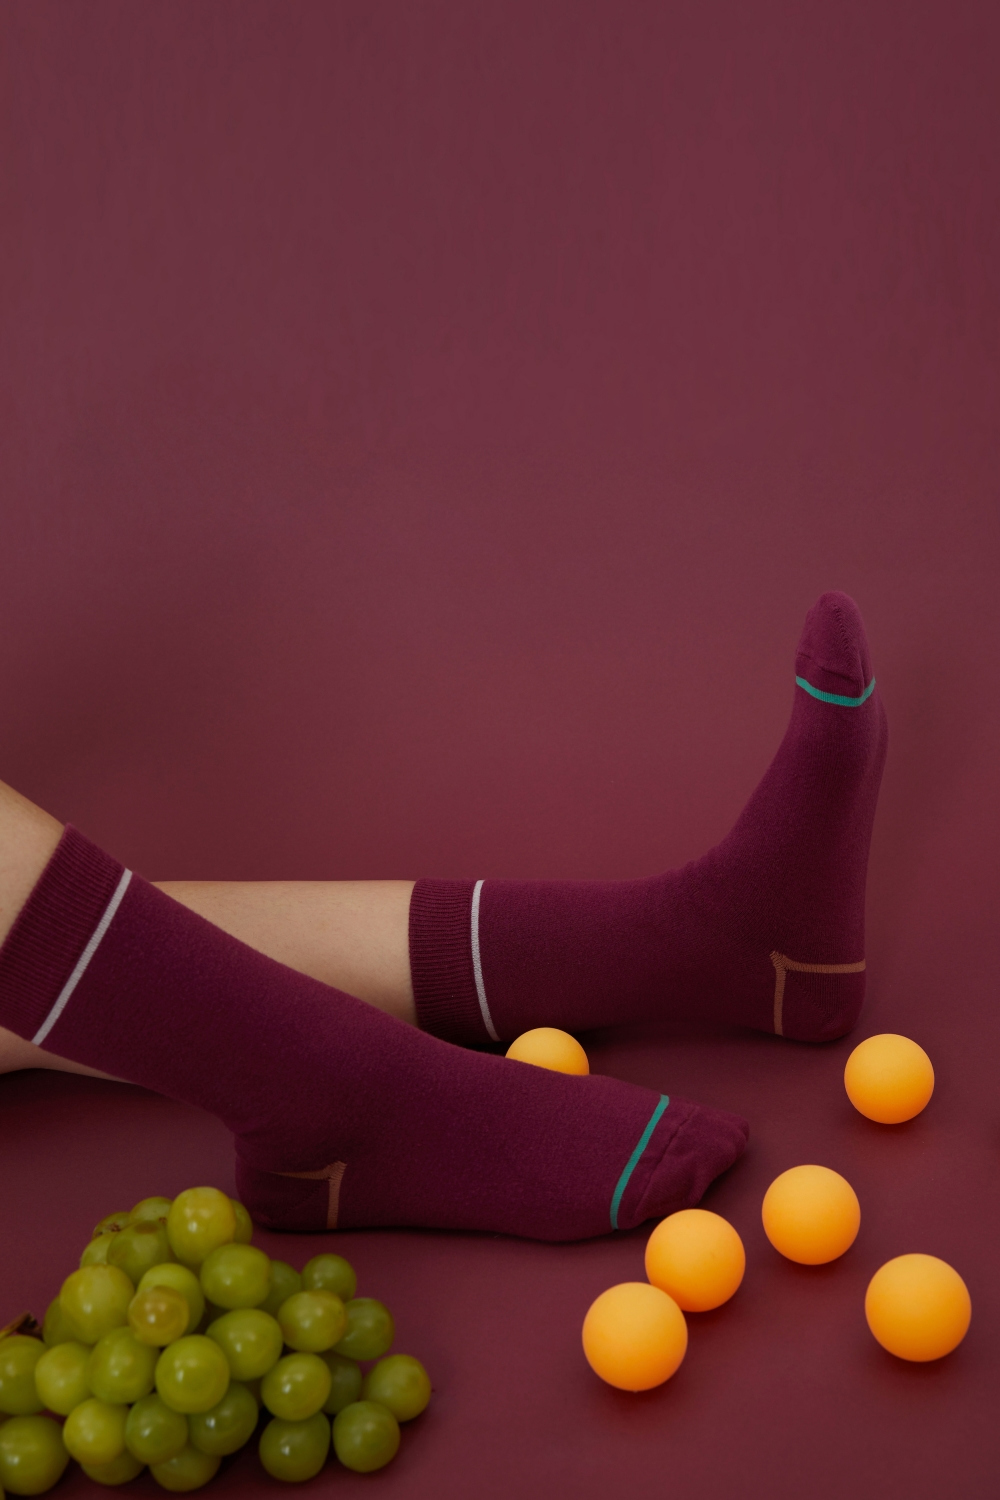 socks detail image-S1L18